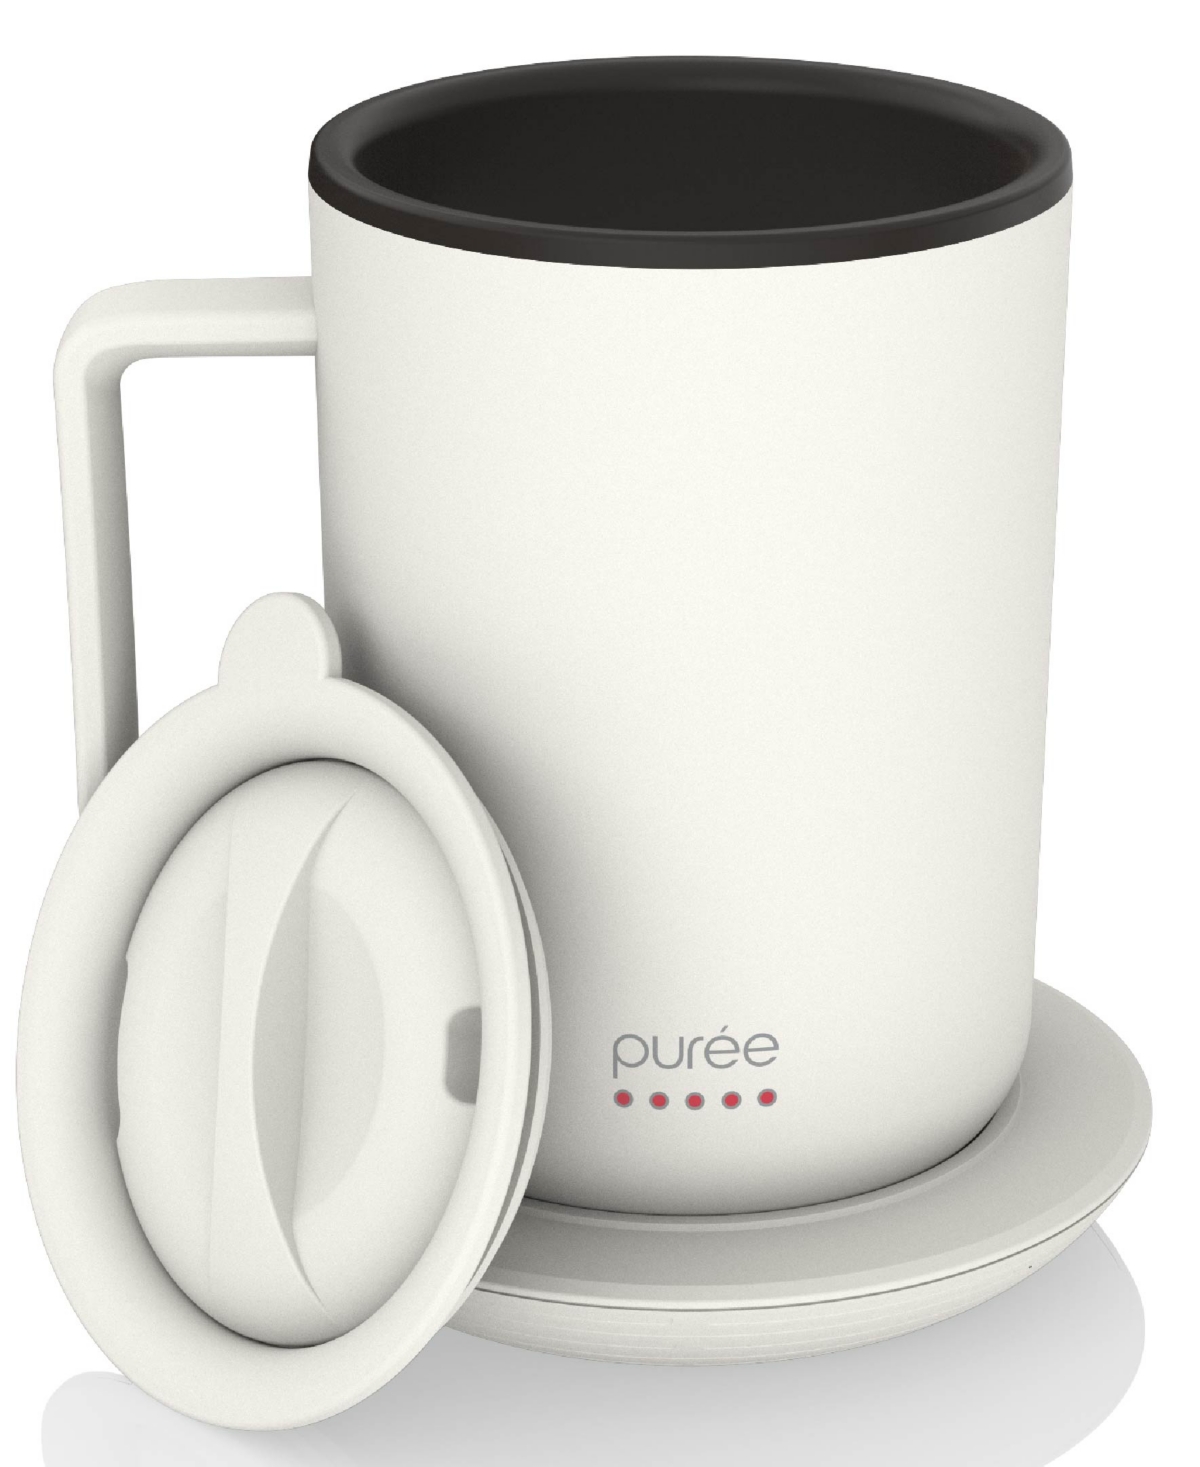 Tzumi Puree Warming Coffee Mug, 12 Oz. Stainless Steel Coffee Mug With Mug Warmer Coaster And Lid In White